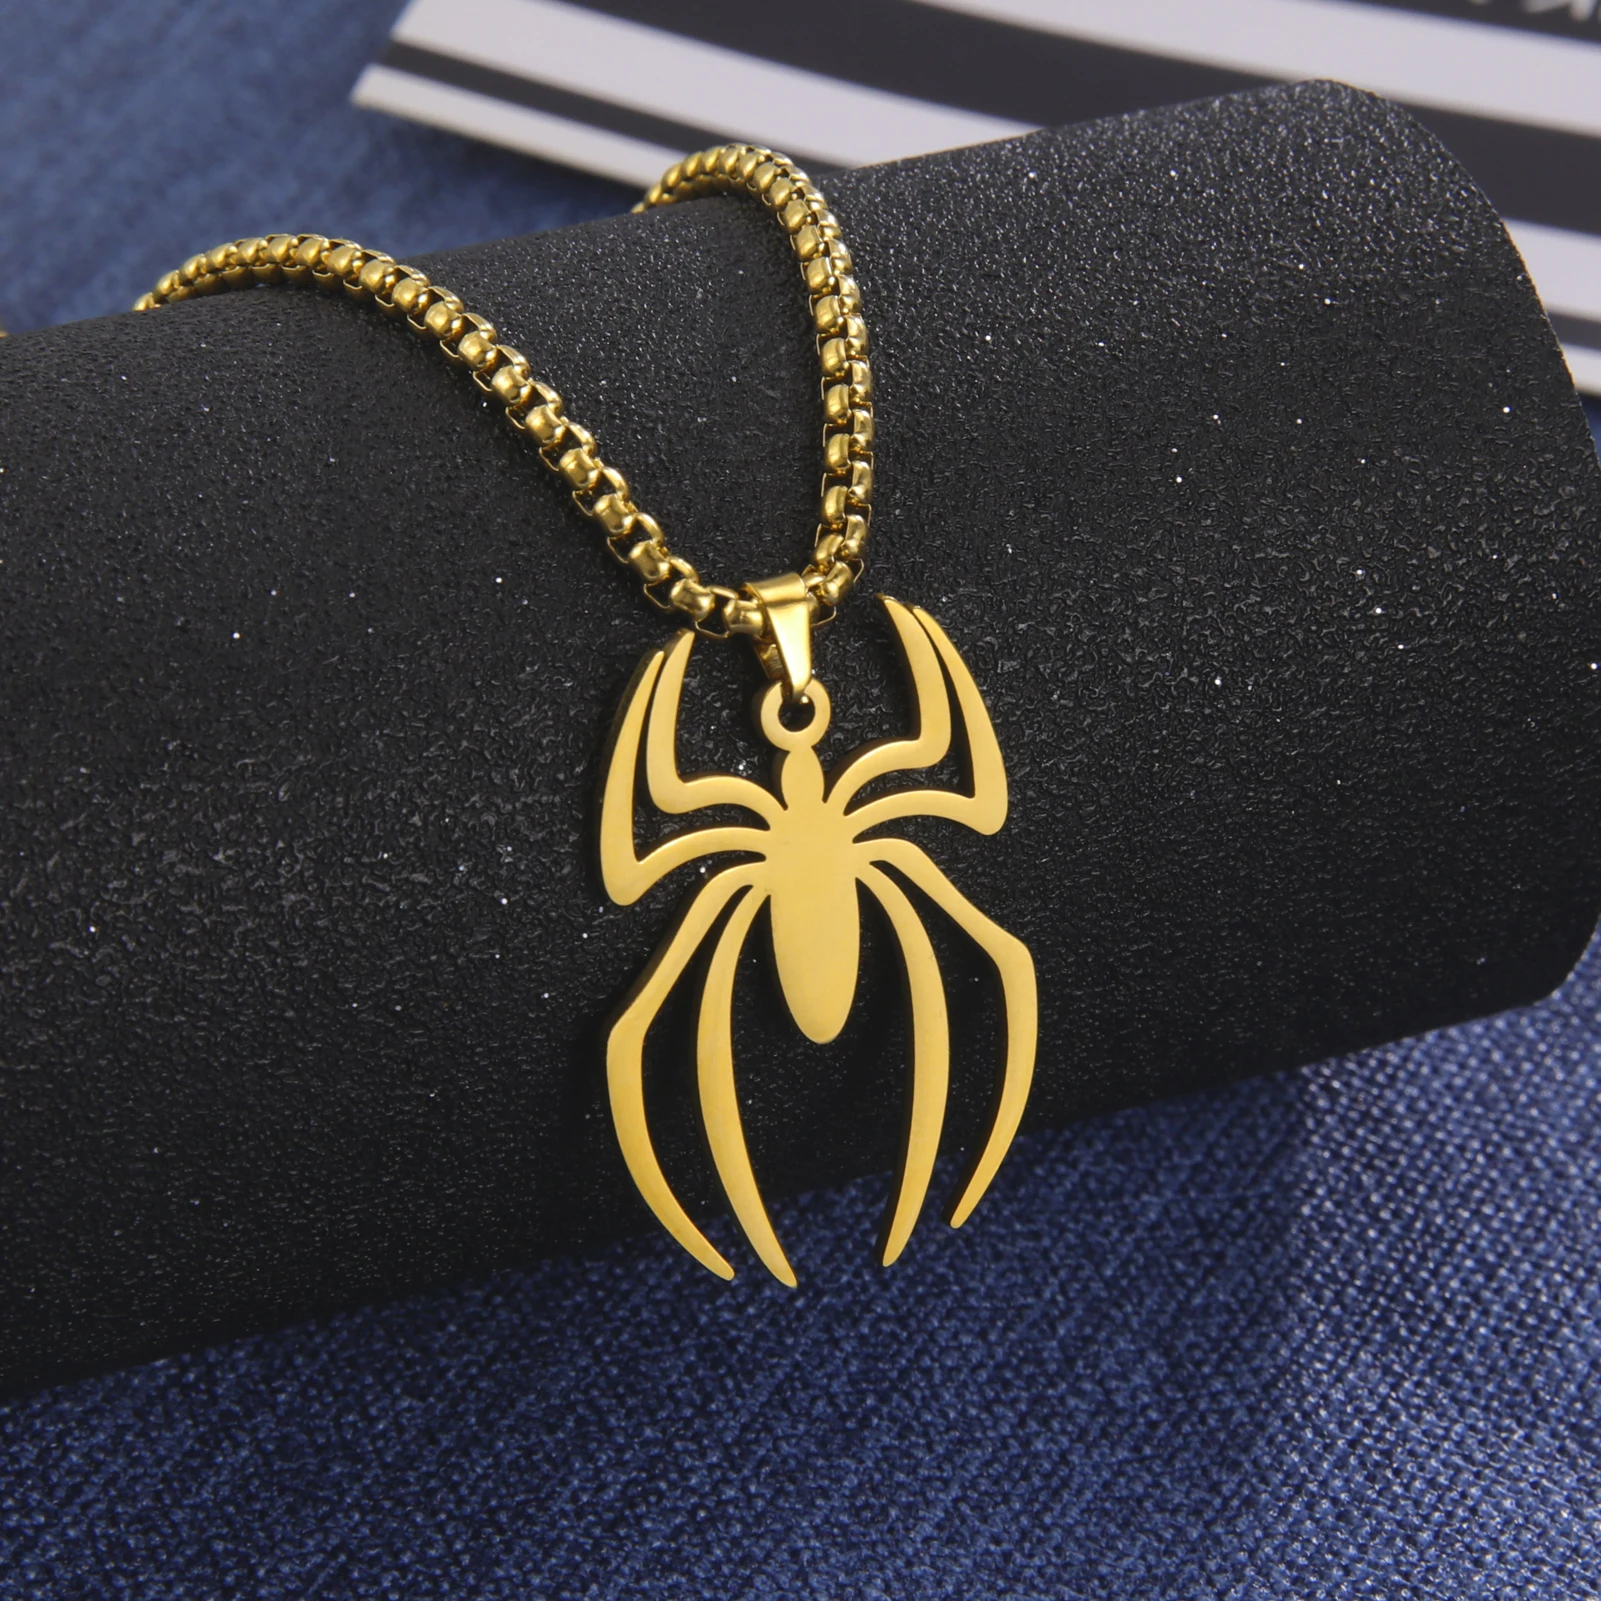 Spiderman Large Medallion Necklace